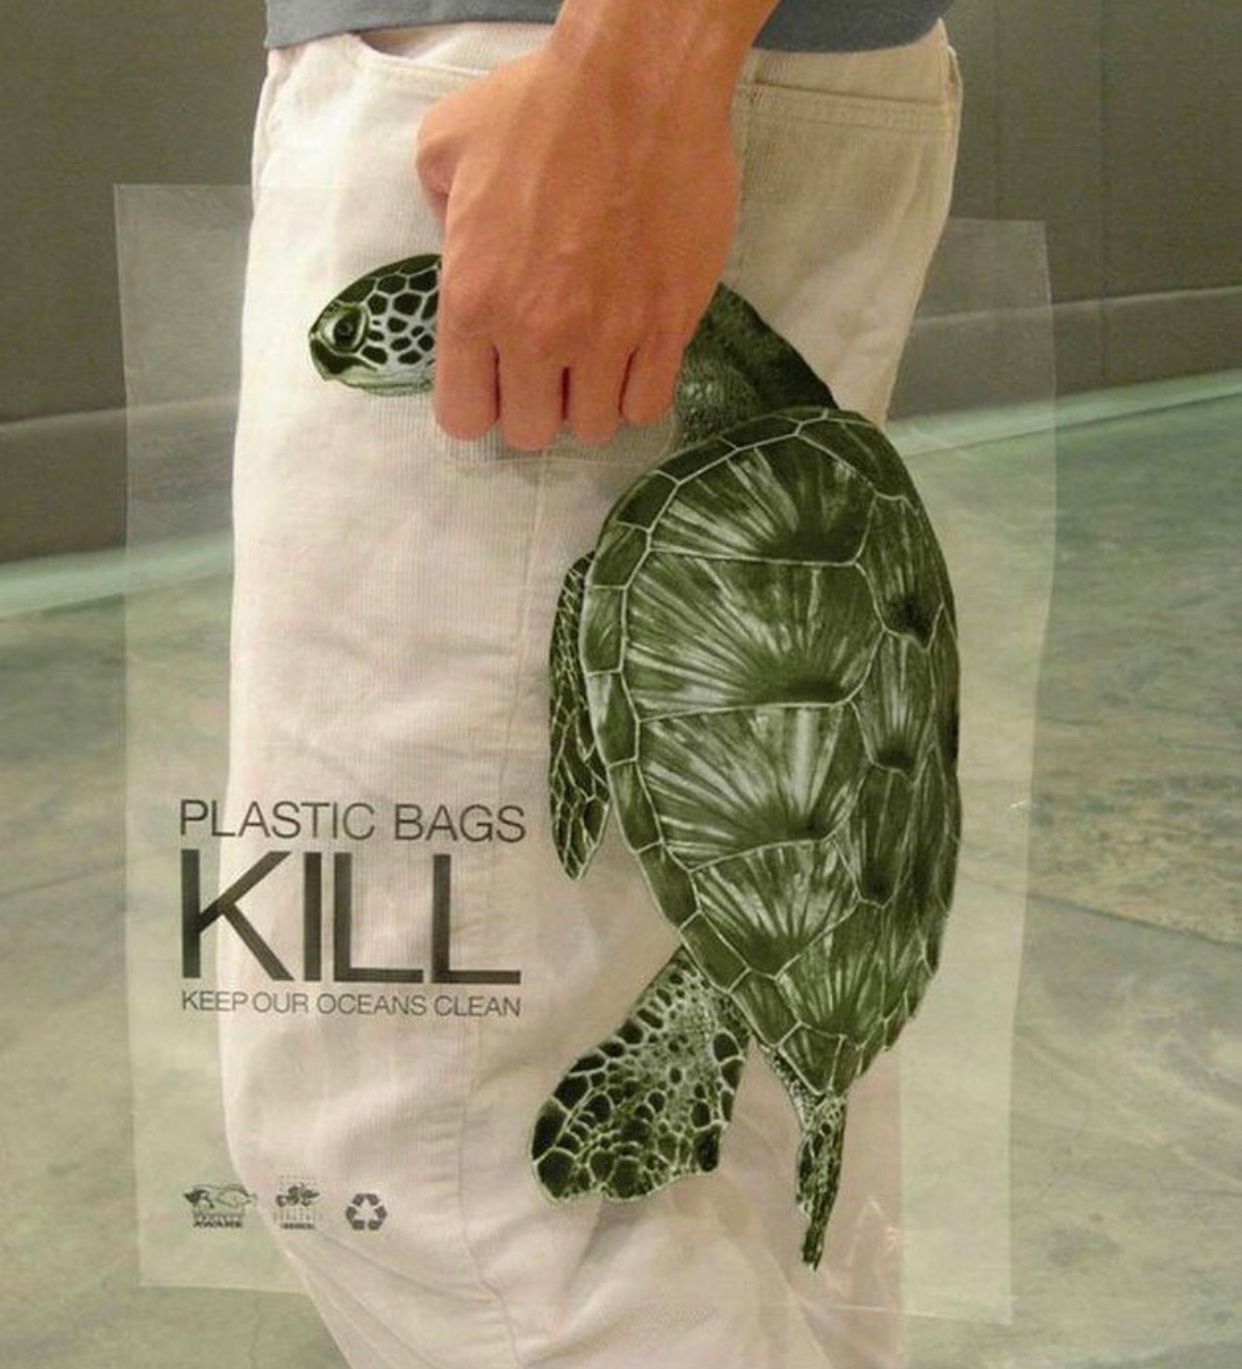 Marketing Birds on X: Plastic bags kill them!